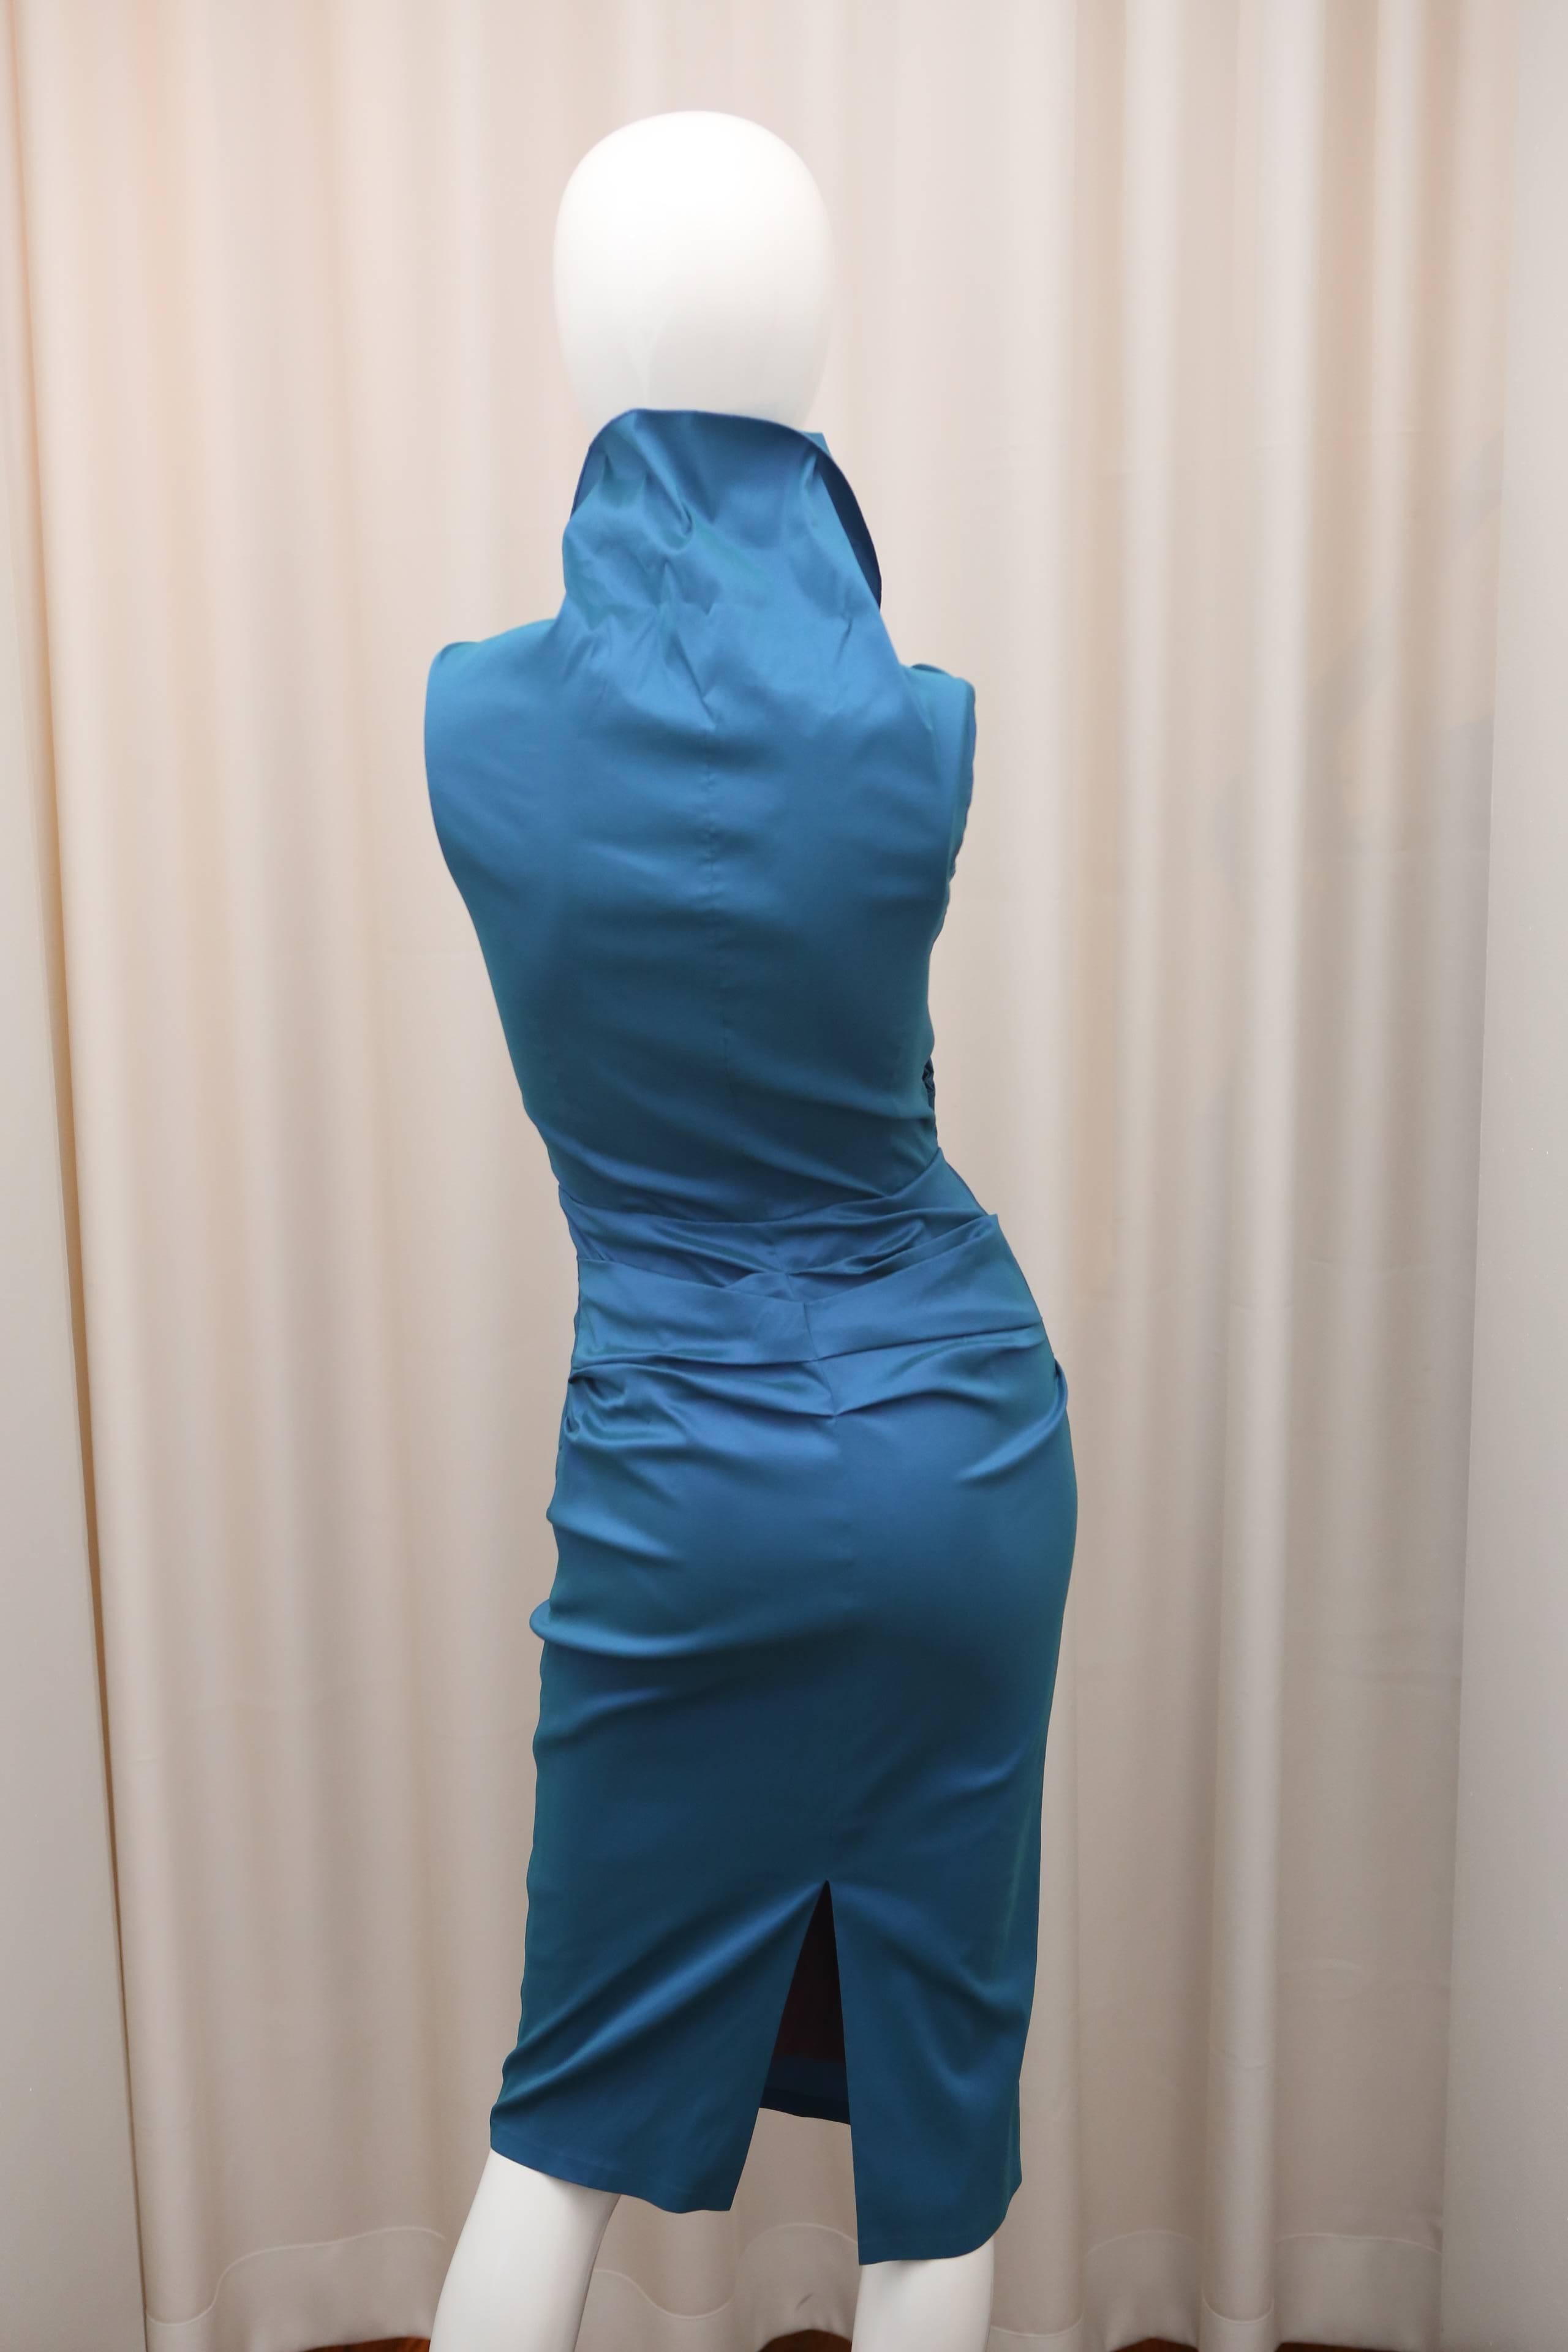 talbot runhof blue dress